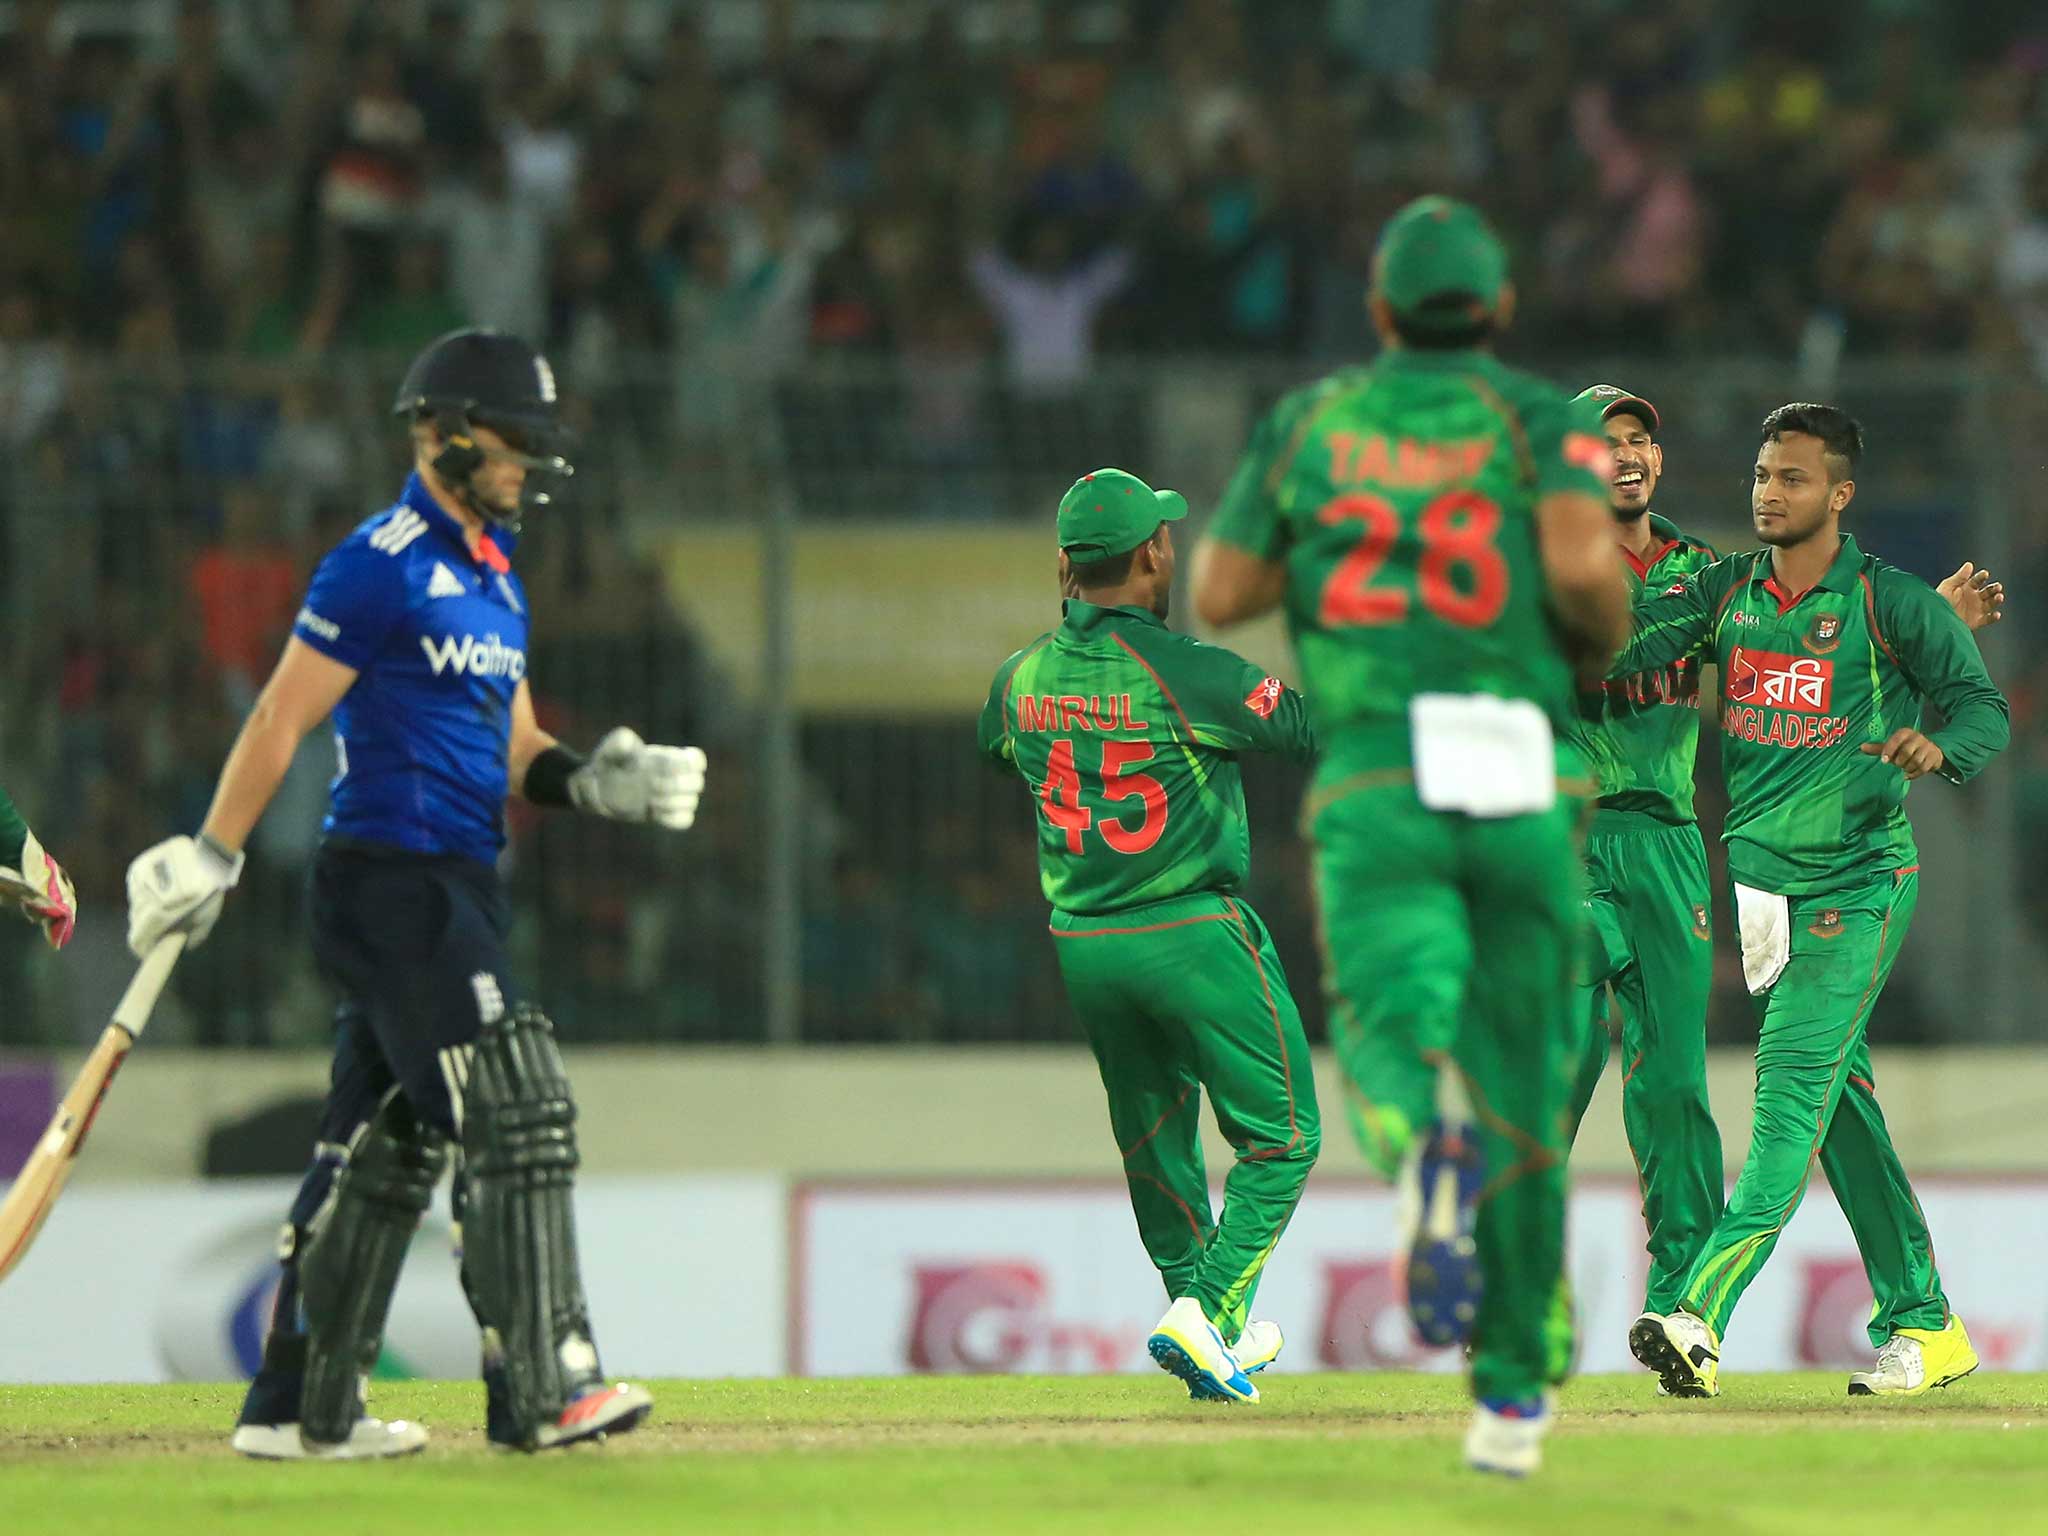 The Bangladesh players celebrate as Ben Duckett makes way